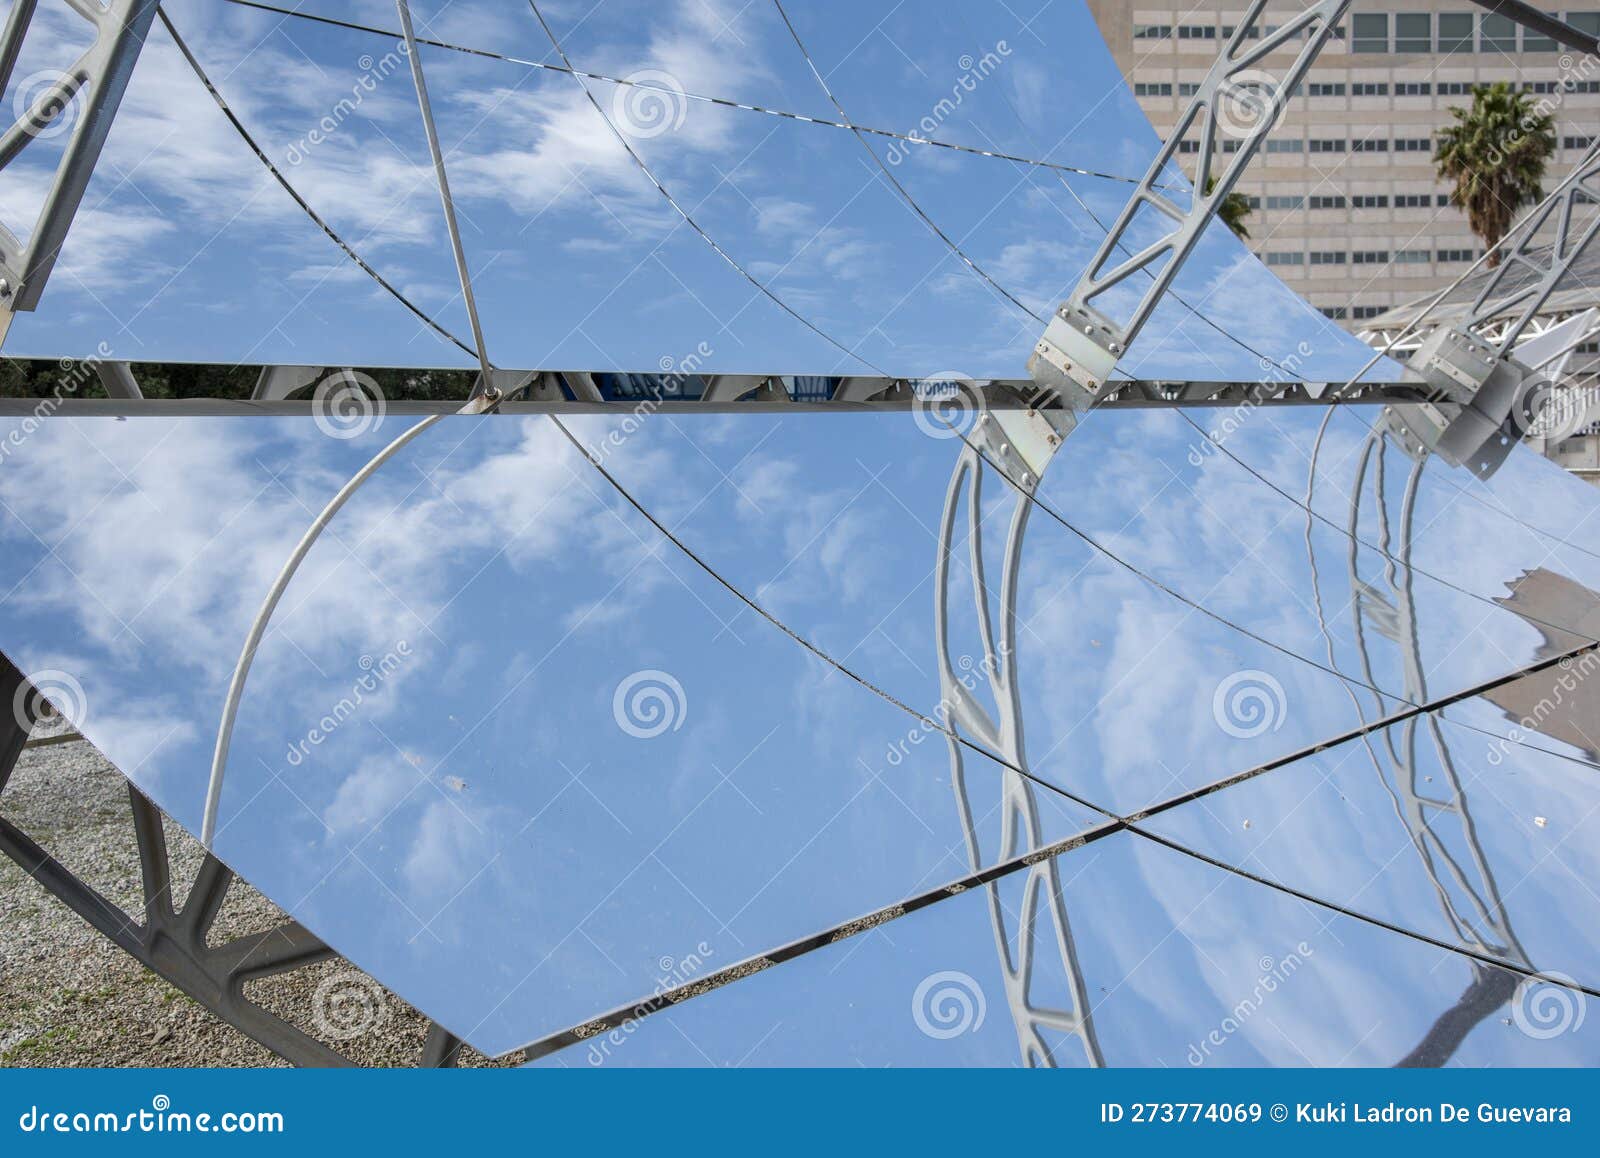 parabolic solar mirrors of a solar energy installation